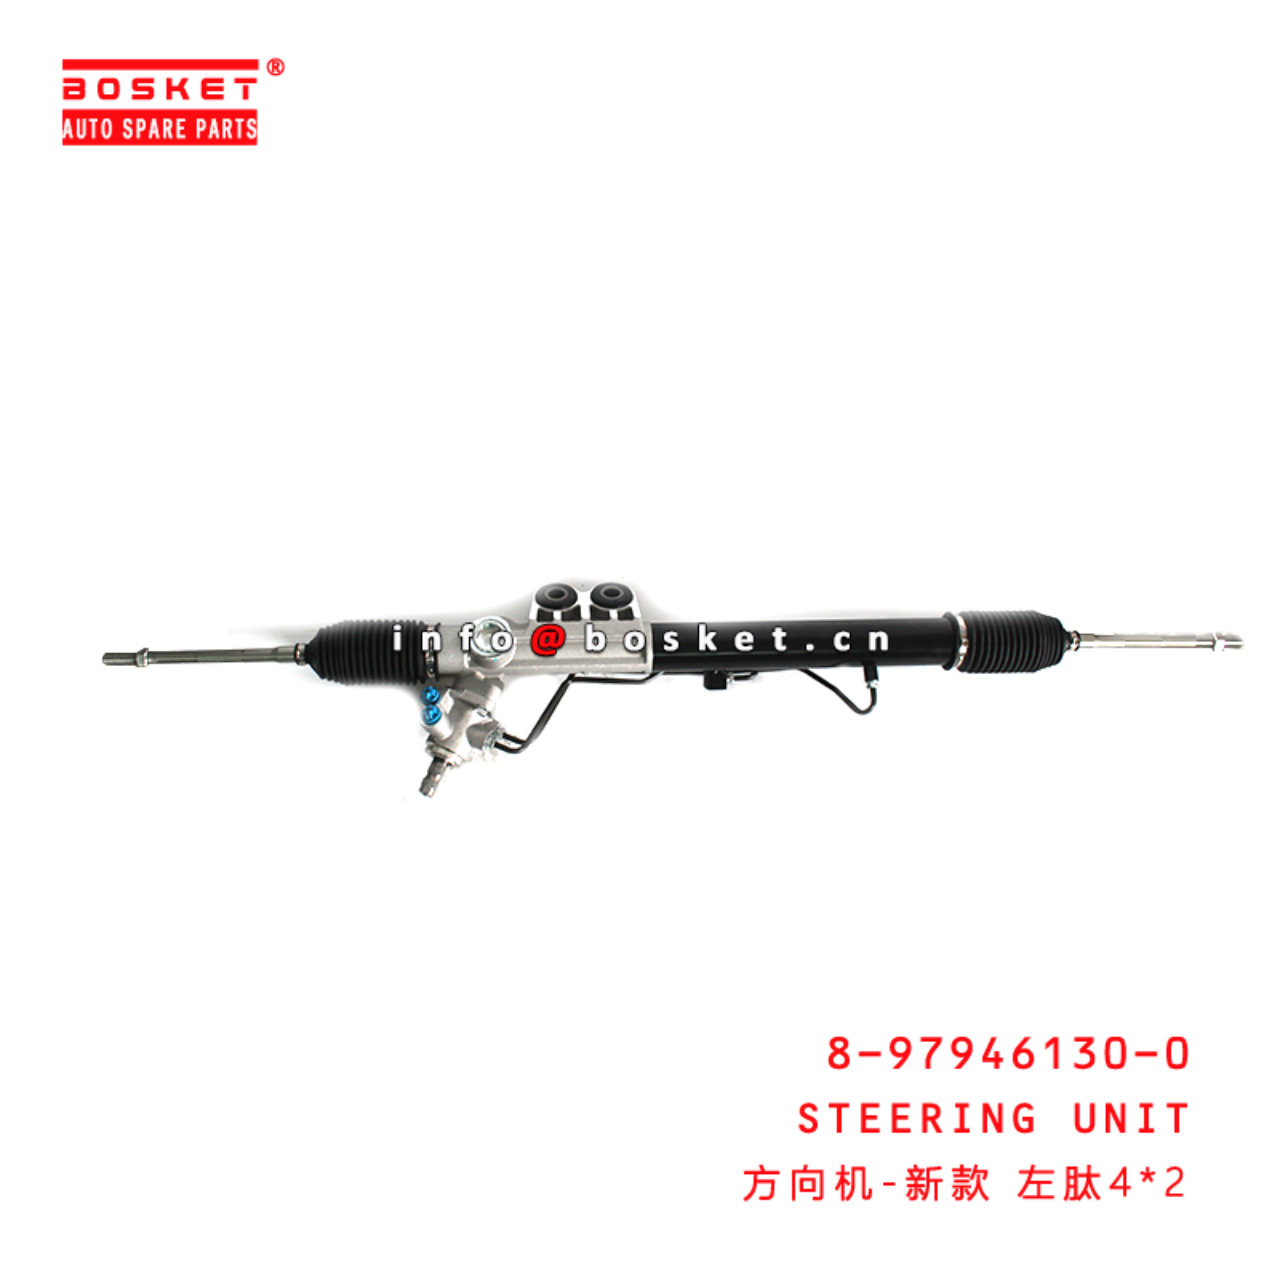 8-97946130-0 Steering Unit suitable for ISUZU DMAX 4*2 8979461300